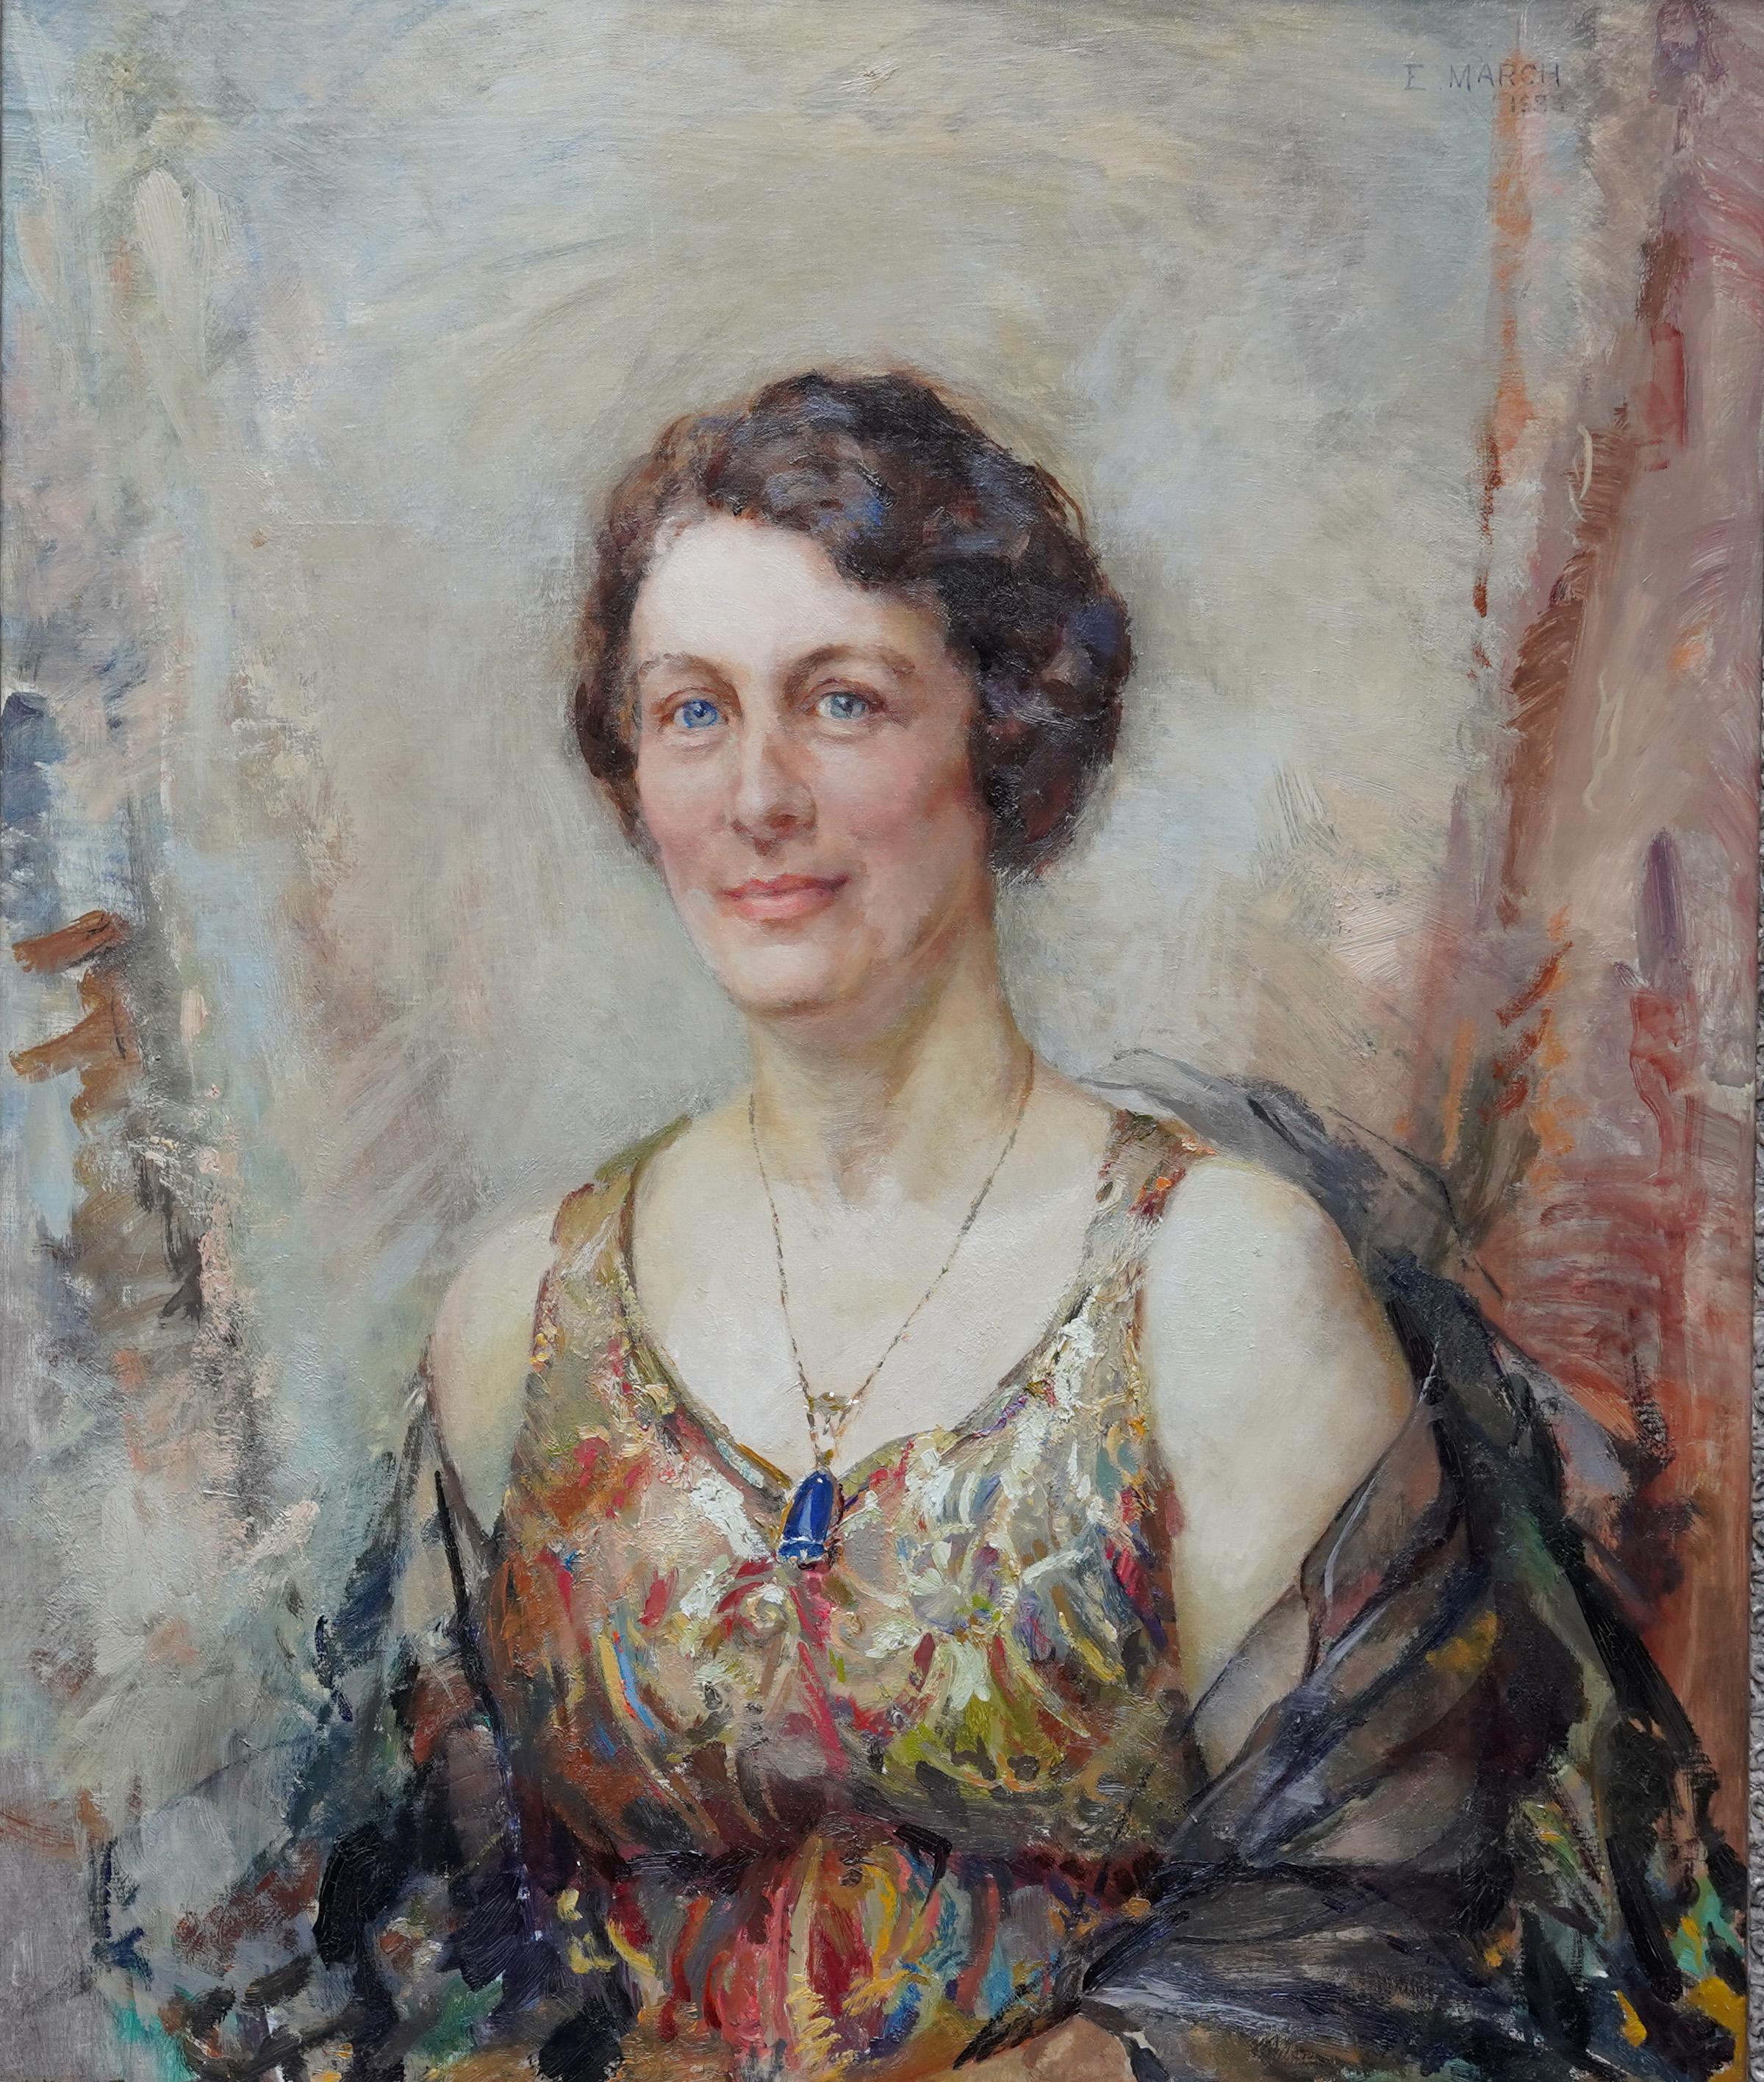 Portrait of a Lady with Pendant - British Art Deco 30's portrait oil painting - Painting by Elsie March